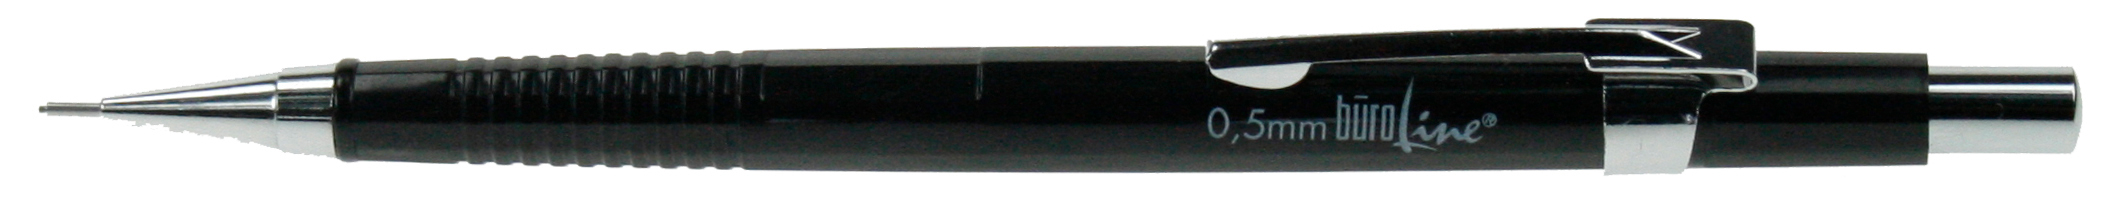 BÜROLINE Porte-mines 0,5mm 254265 noir